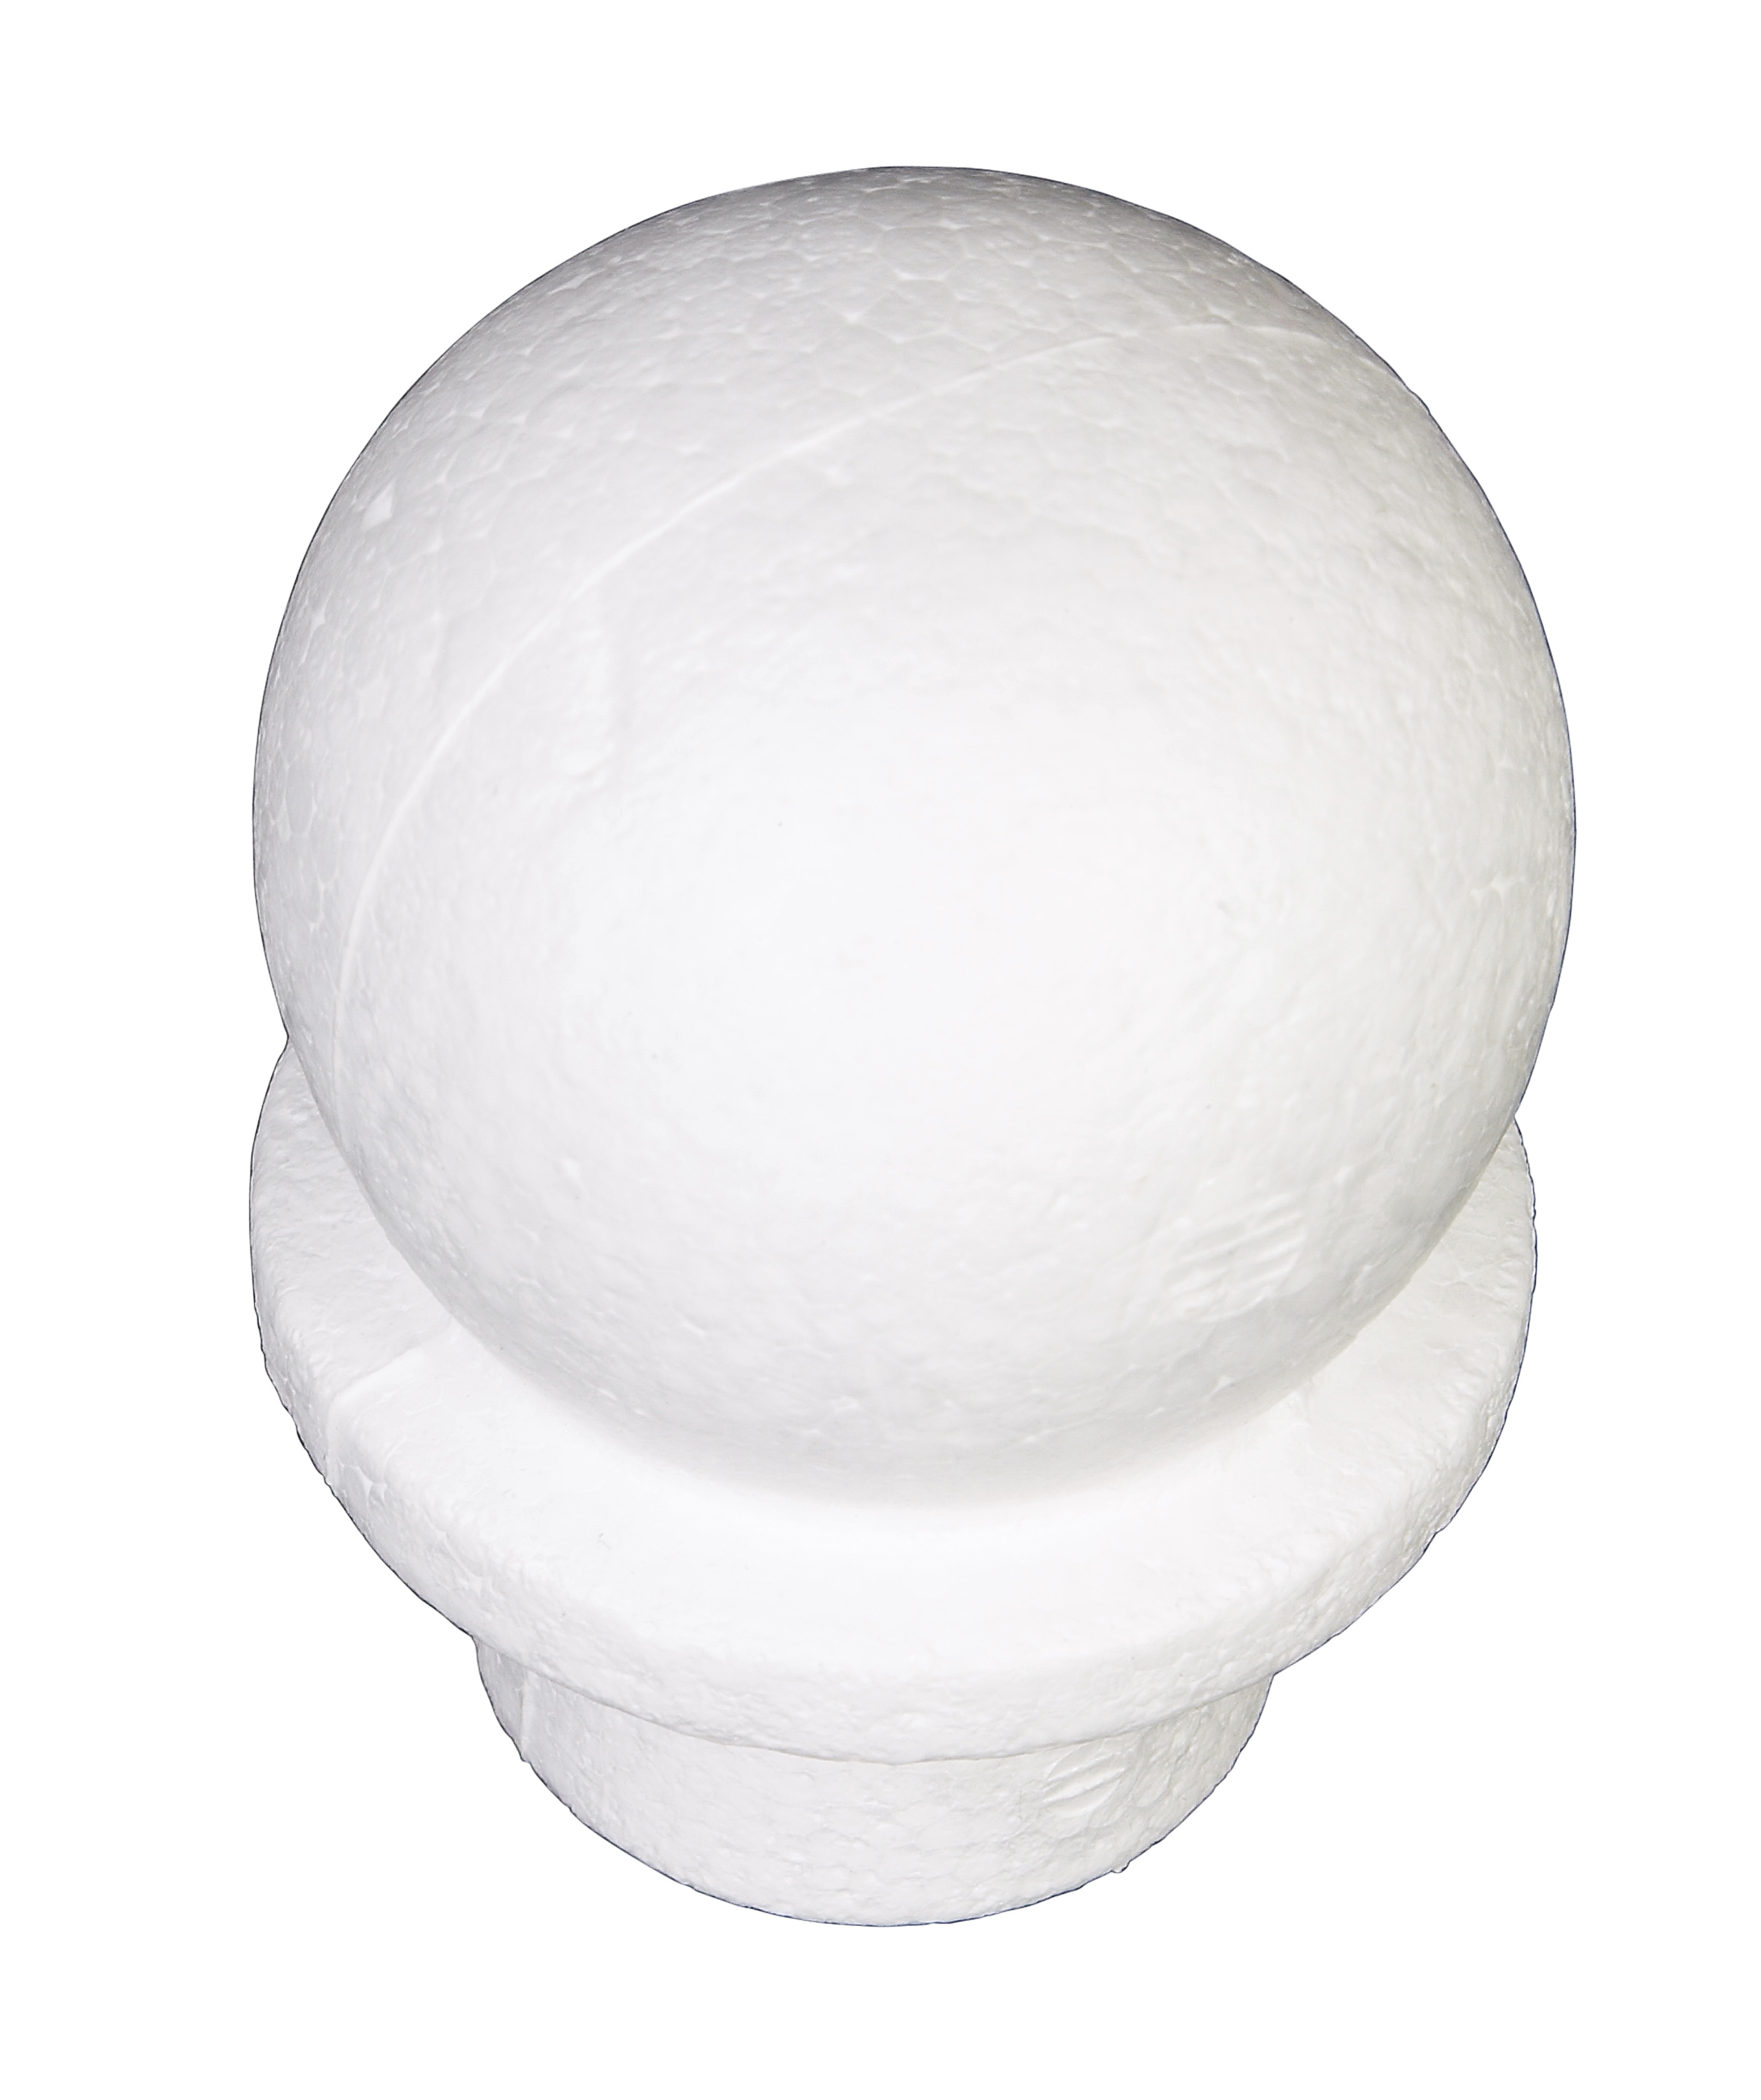 How to Dye Styrofoam Balls